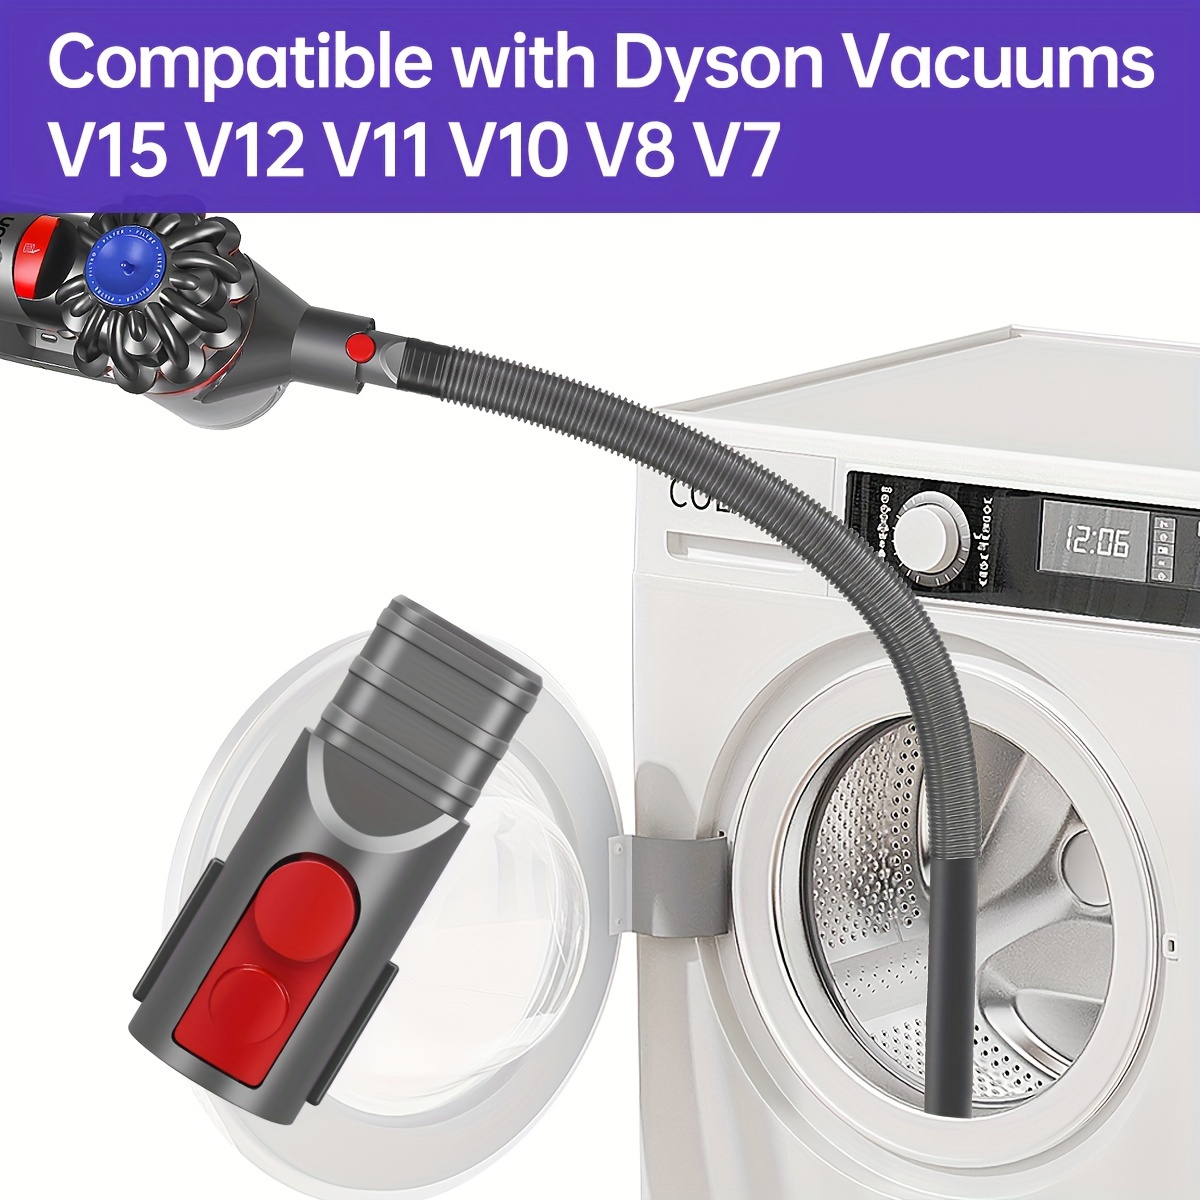 

Set, Dryer Vent Cleaner Kit Vacuum Hose Attachment For V15 V12 V11 V10 V8 V7 Vacuum Cleaners, Lint Remover, Dryer Lint Vacuum Attachment, Grey